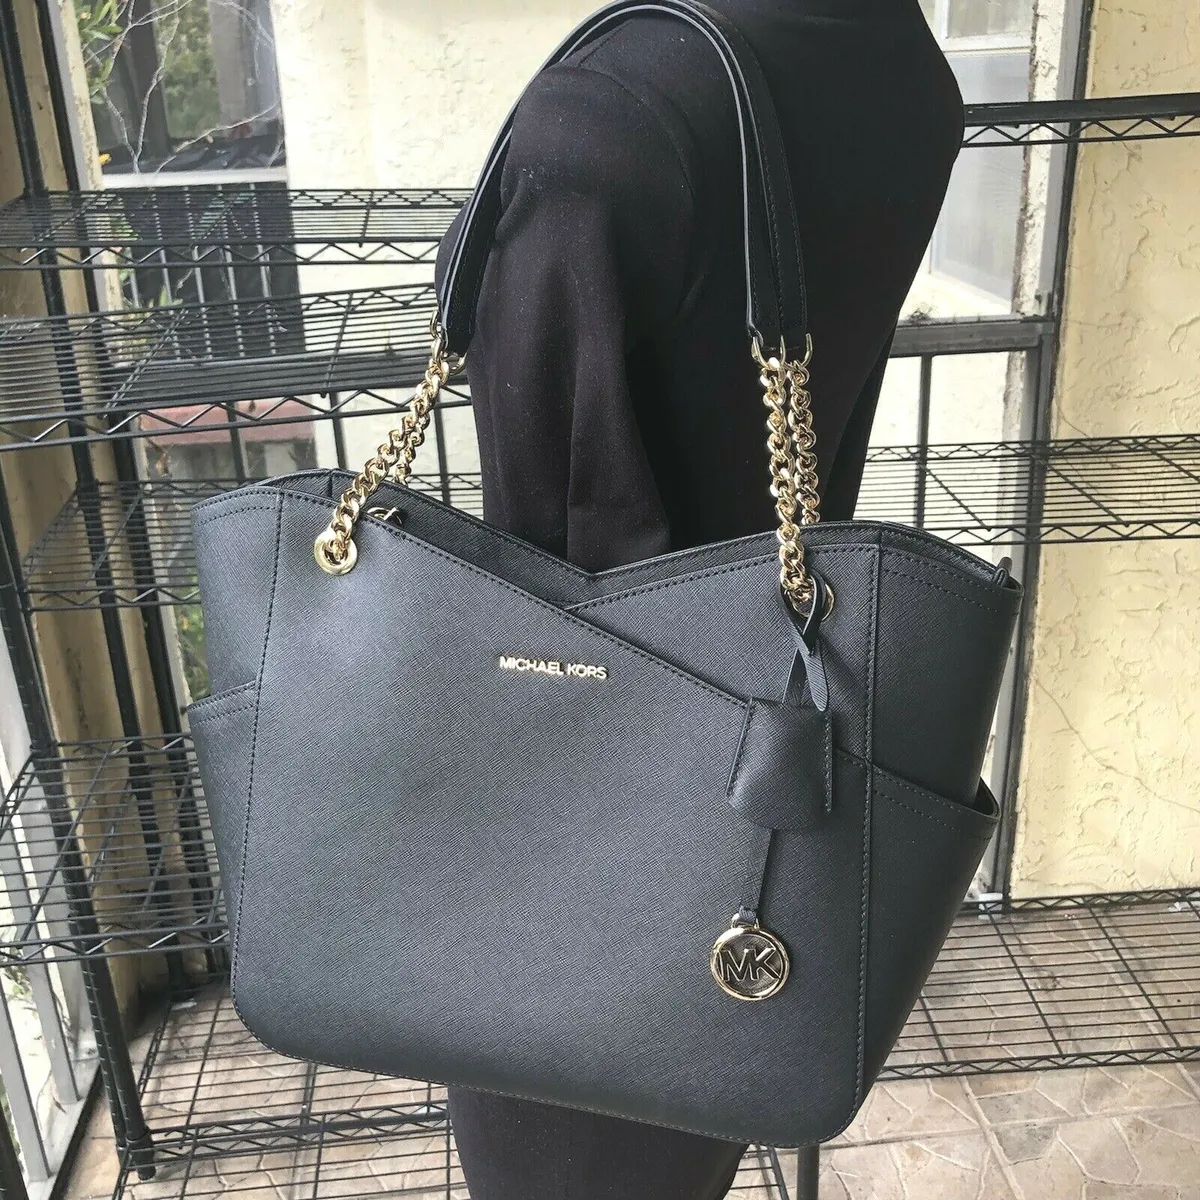 Michael Kors Women Large Leather Shoulder Tote Purse Handbag Bag